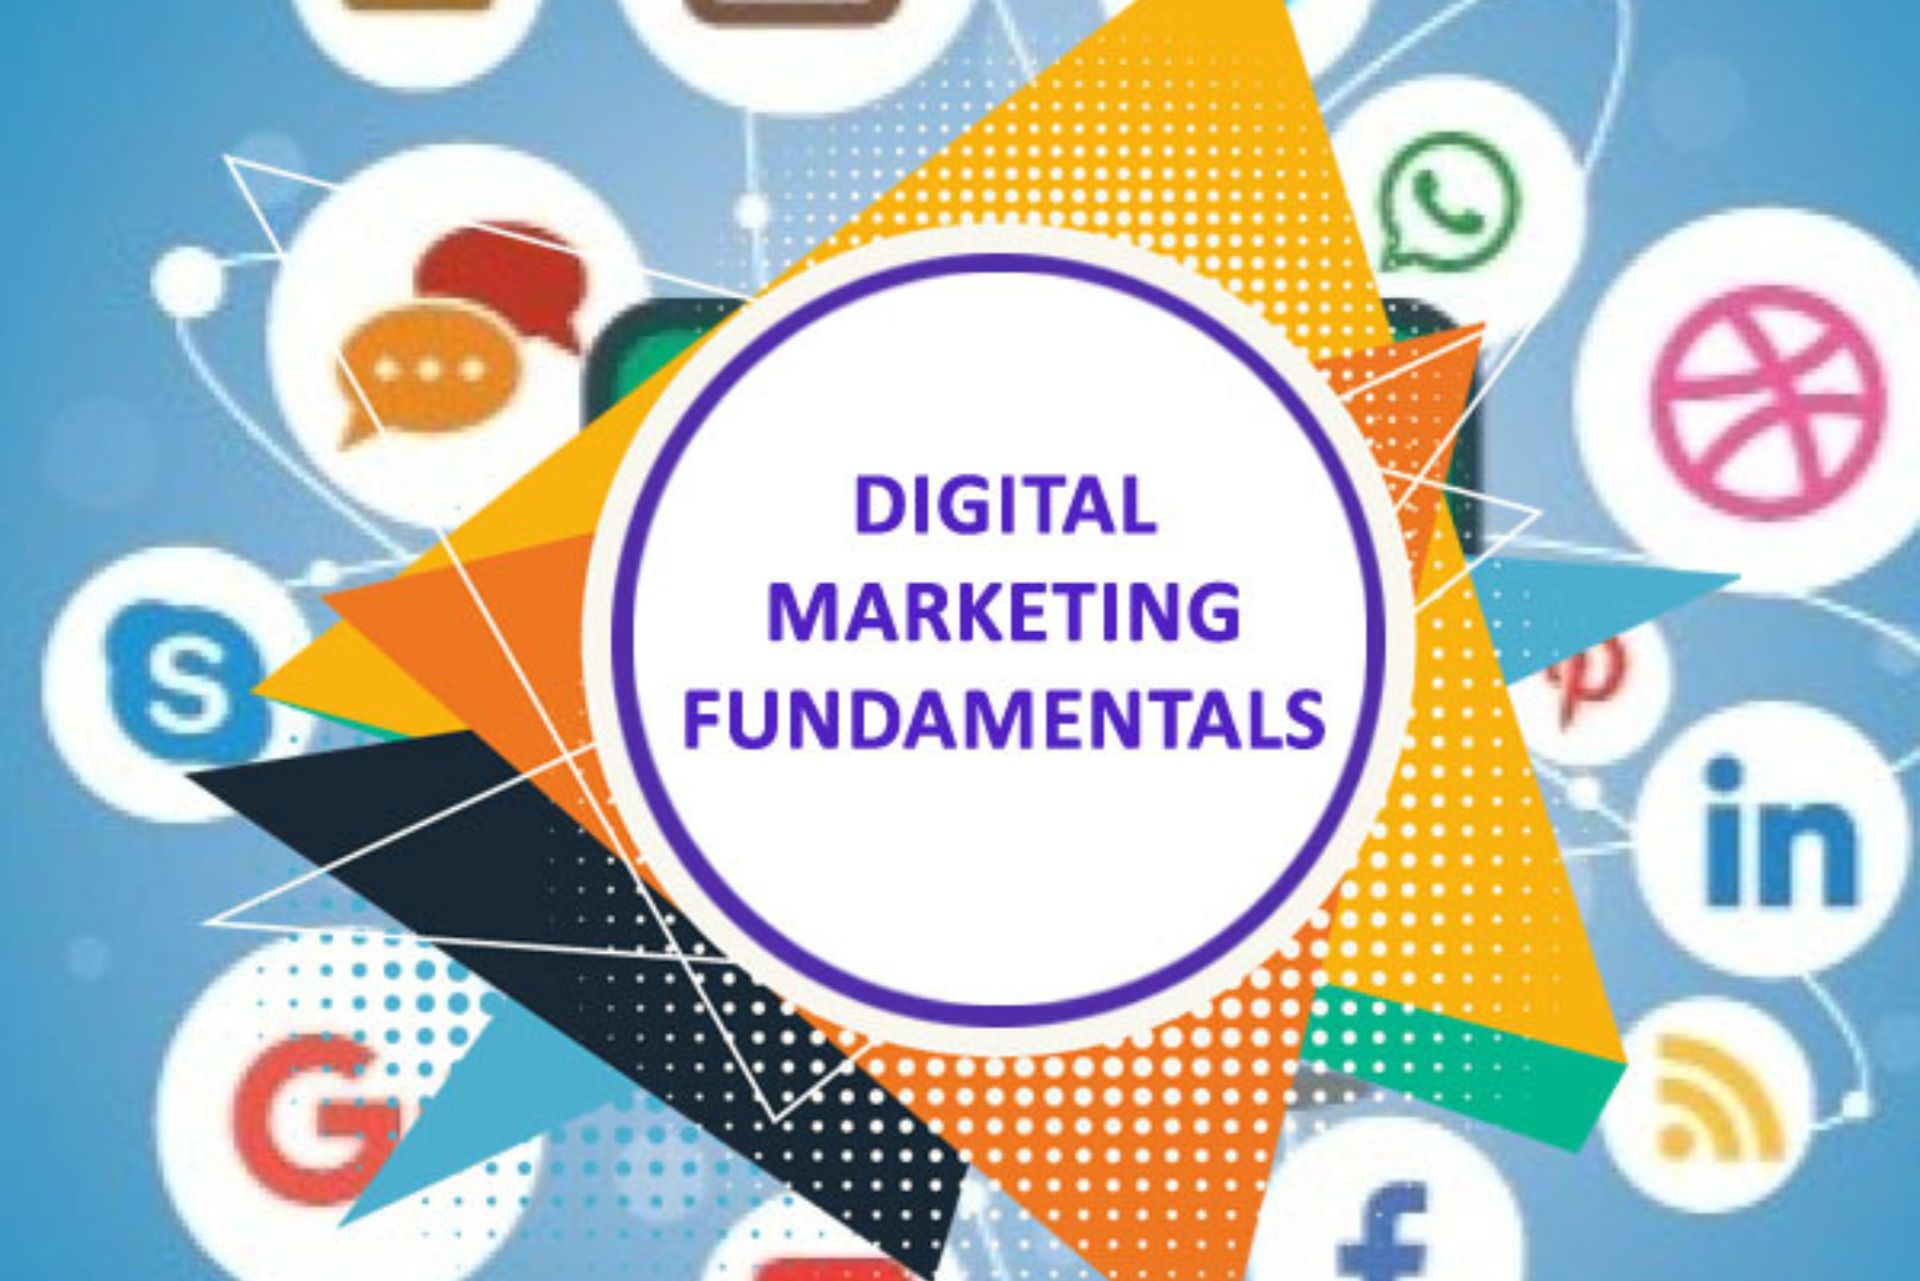 Fundamentals to Digital Marketing Course